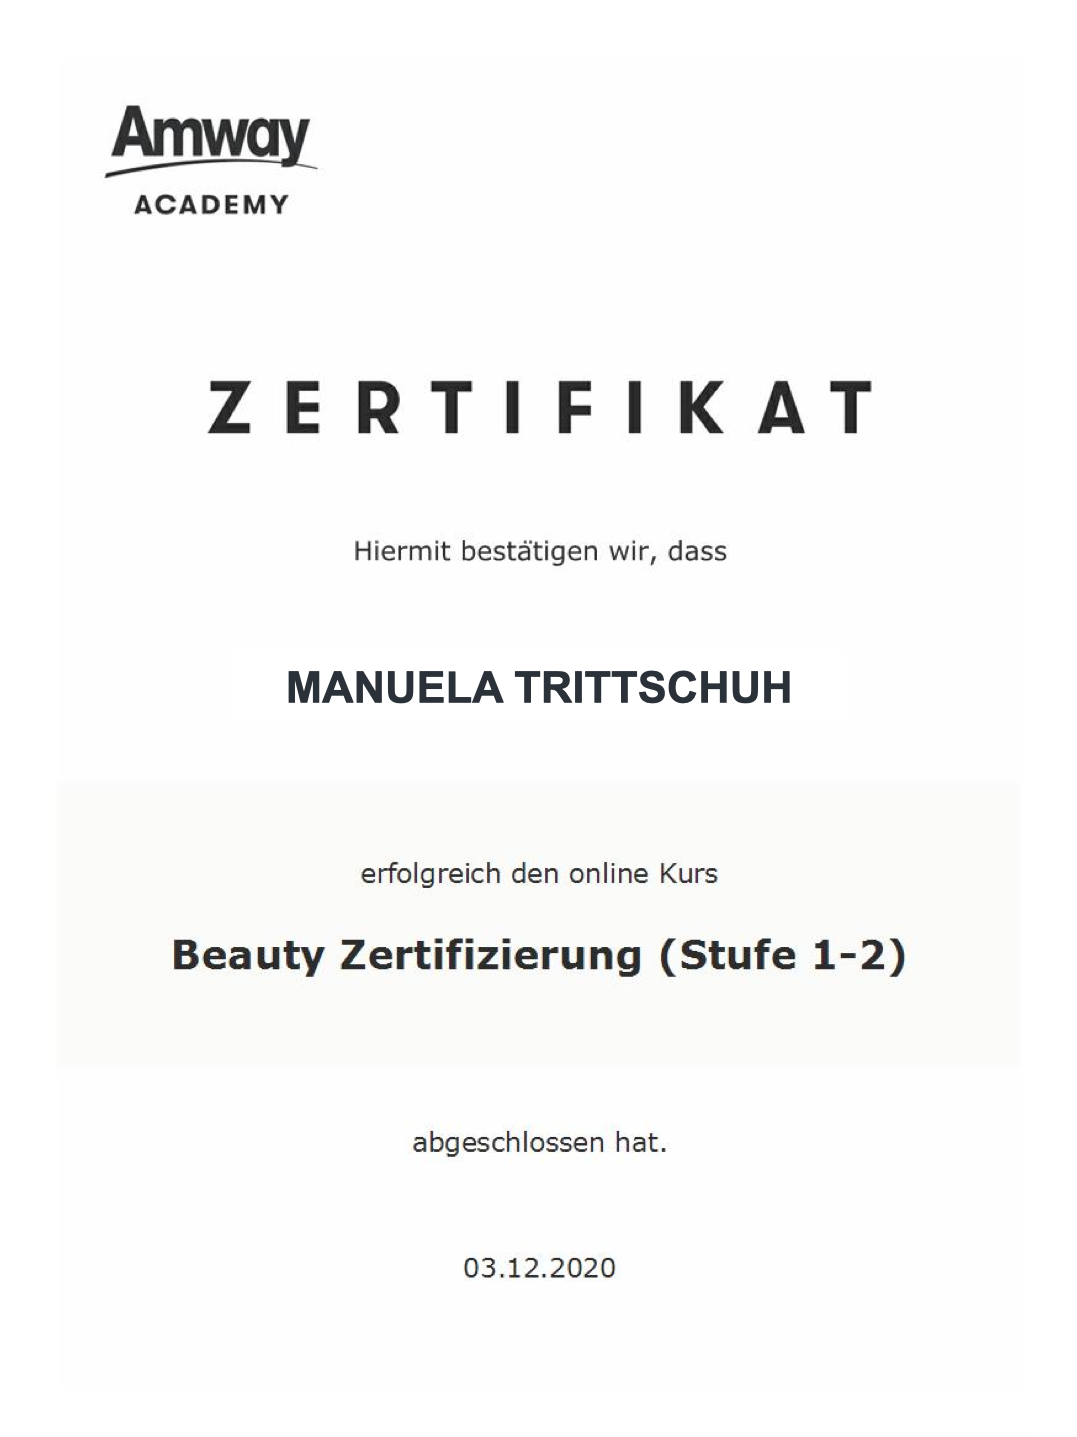 Zertifikat - Beauty - Manuela Trittschuh